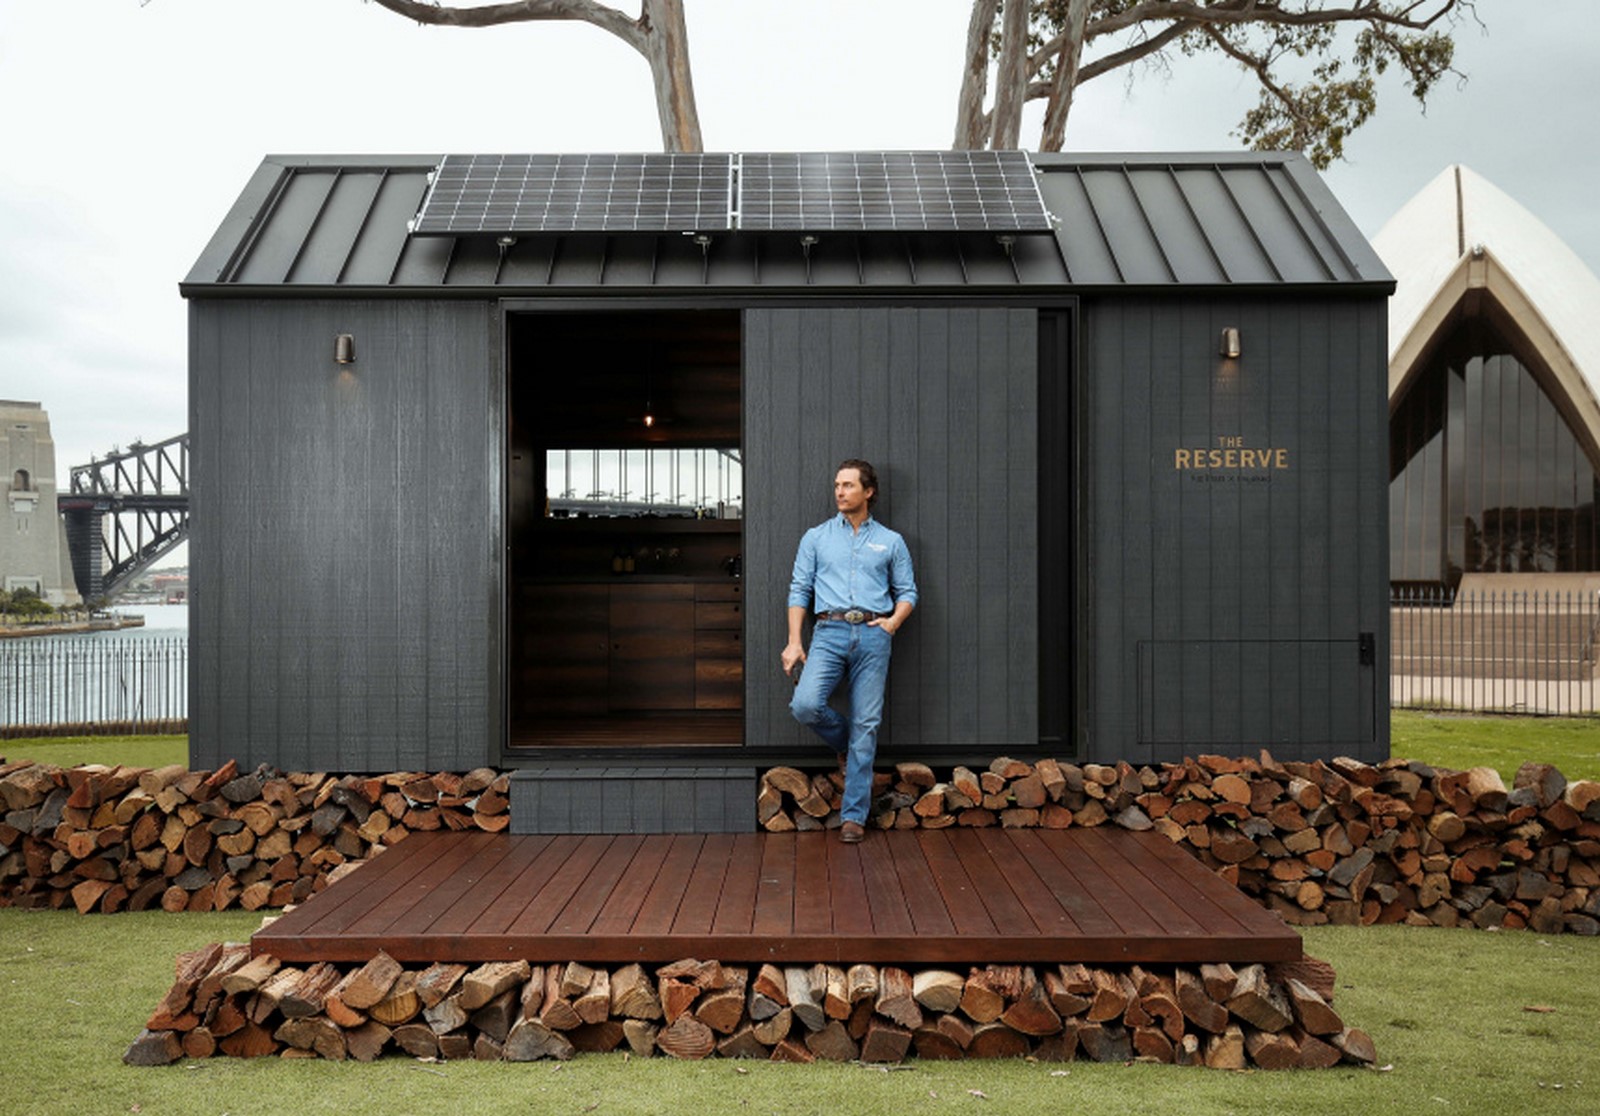 Archisearch Matthew McConaughey & Unyoked present a 'wilderness hideout' in Australia